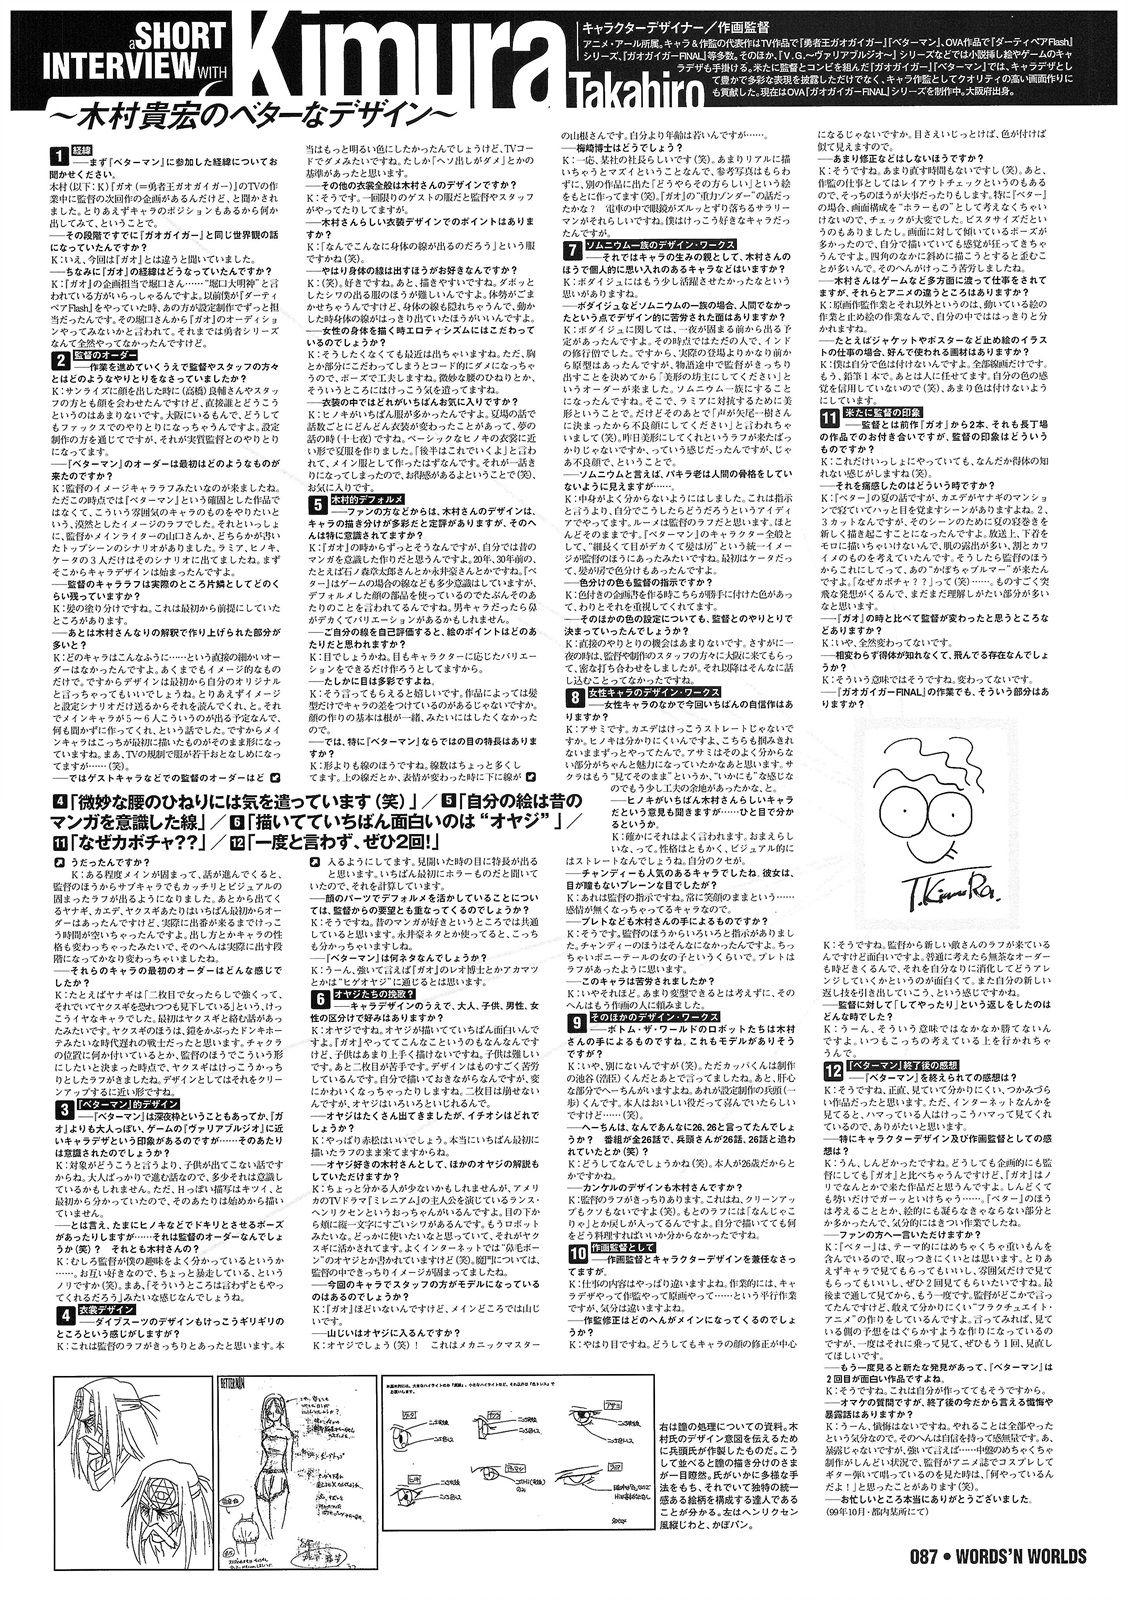 BETTERMAN COMPLETE BOOK 鑑-kagami- - 第02卷(2/3) - 1